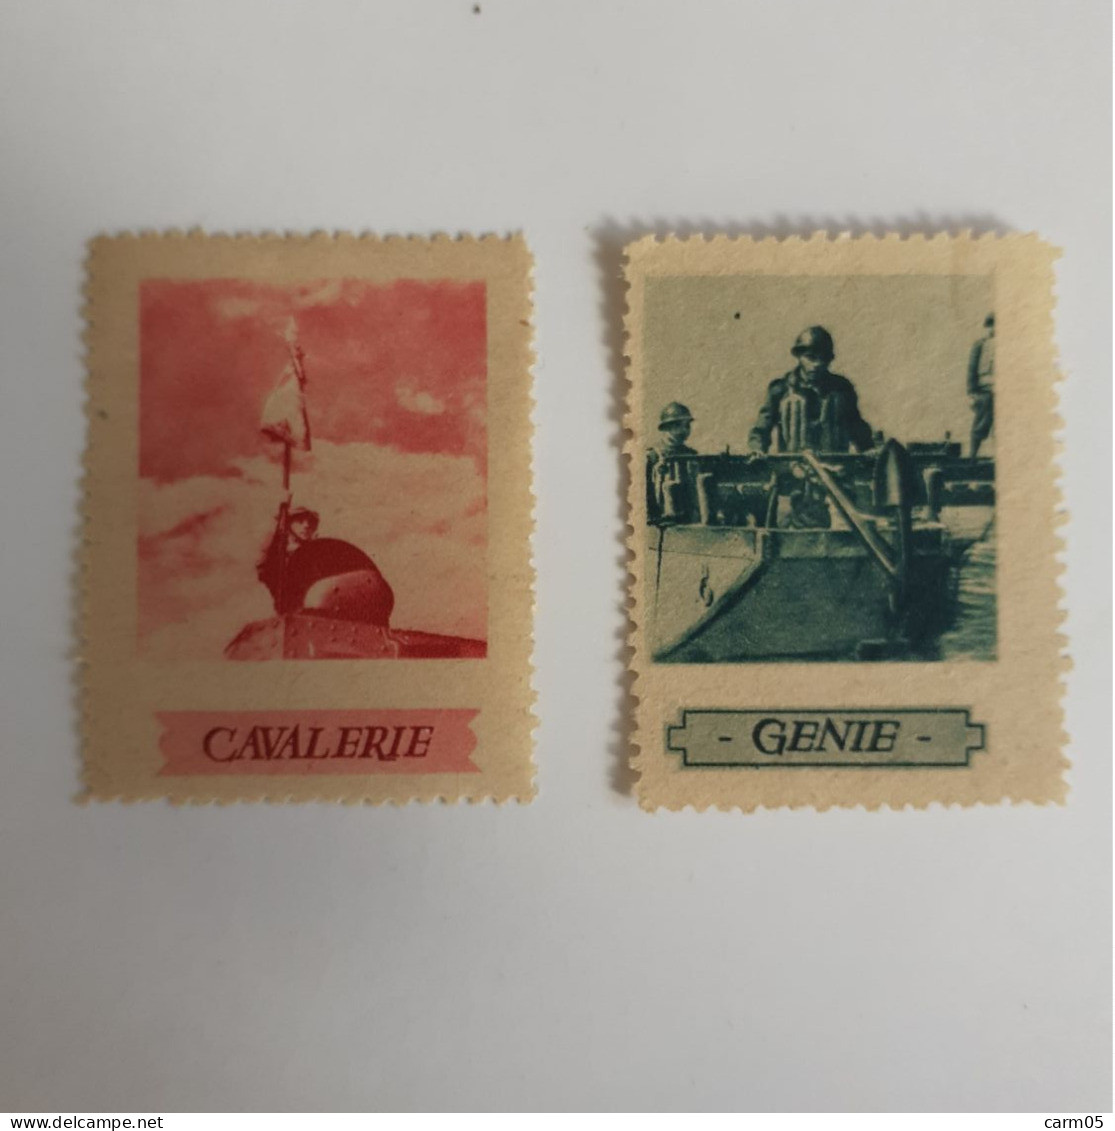 2 Vignettes Cavalerie - Génie (1930)  -Erinnophilie - Military Heritage